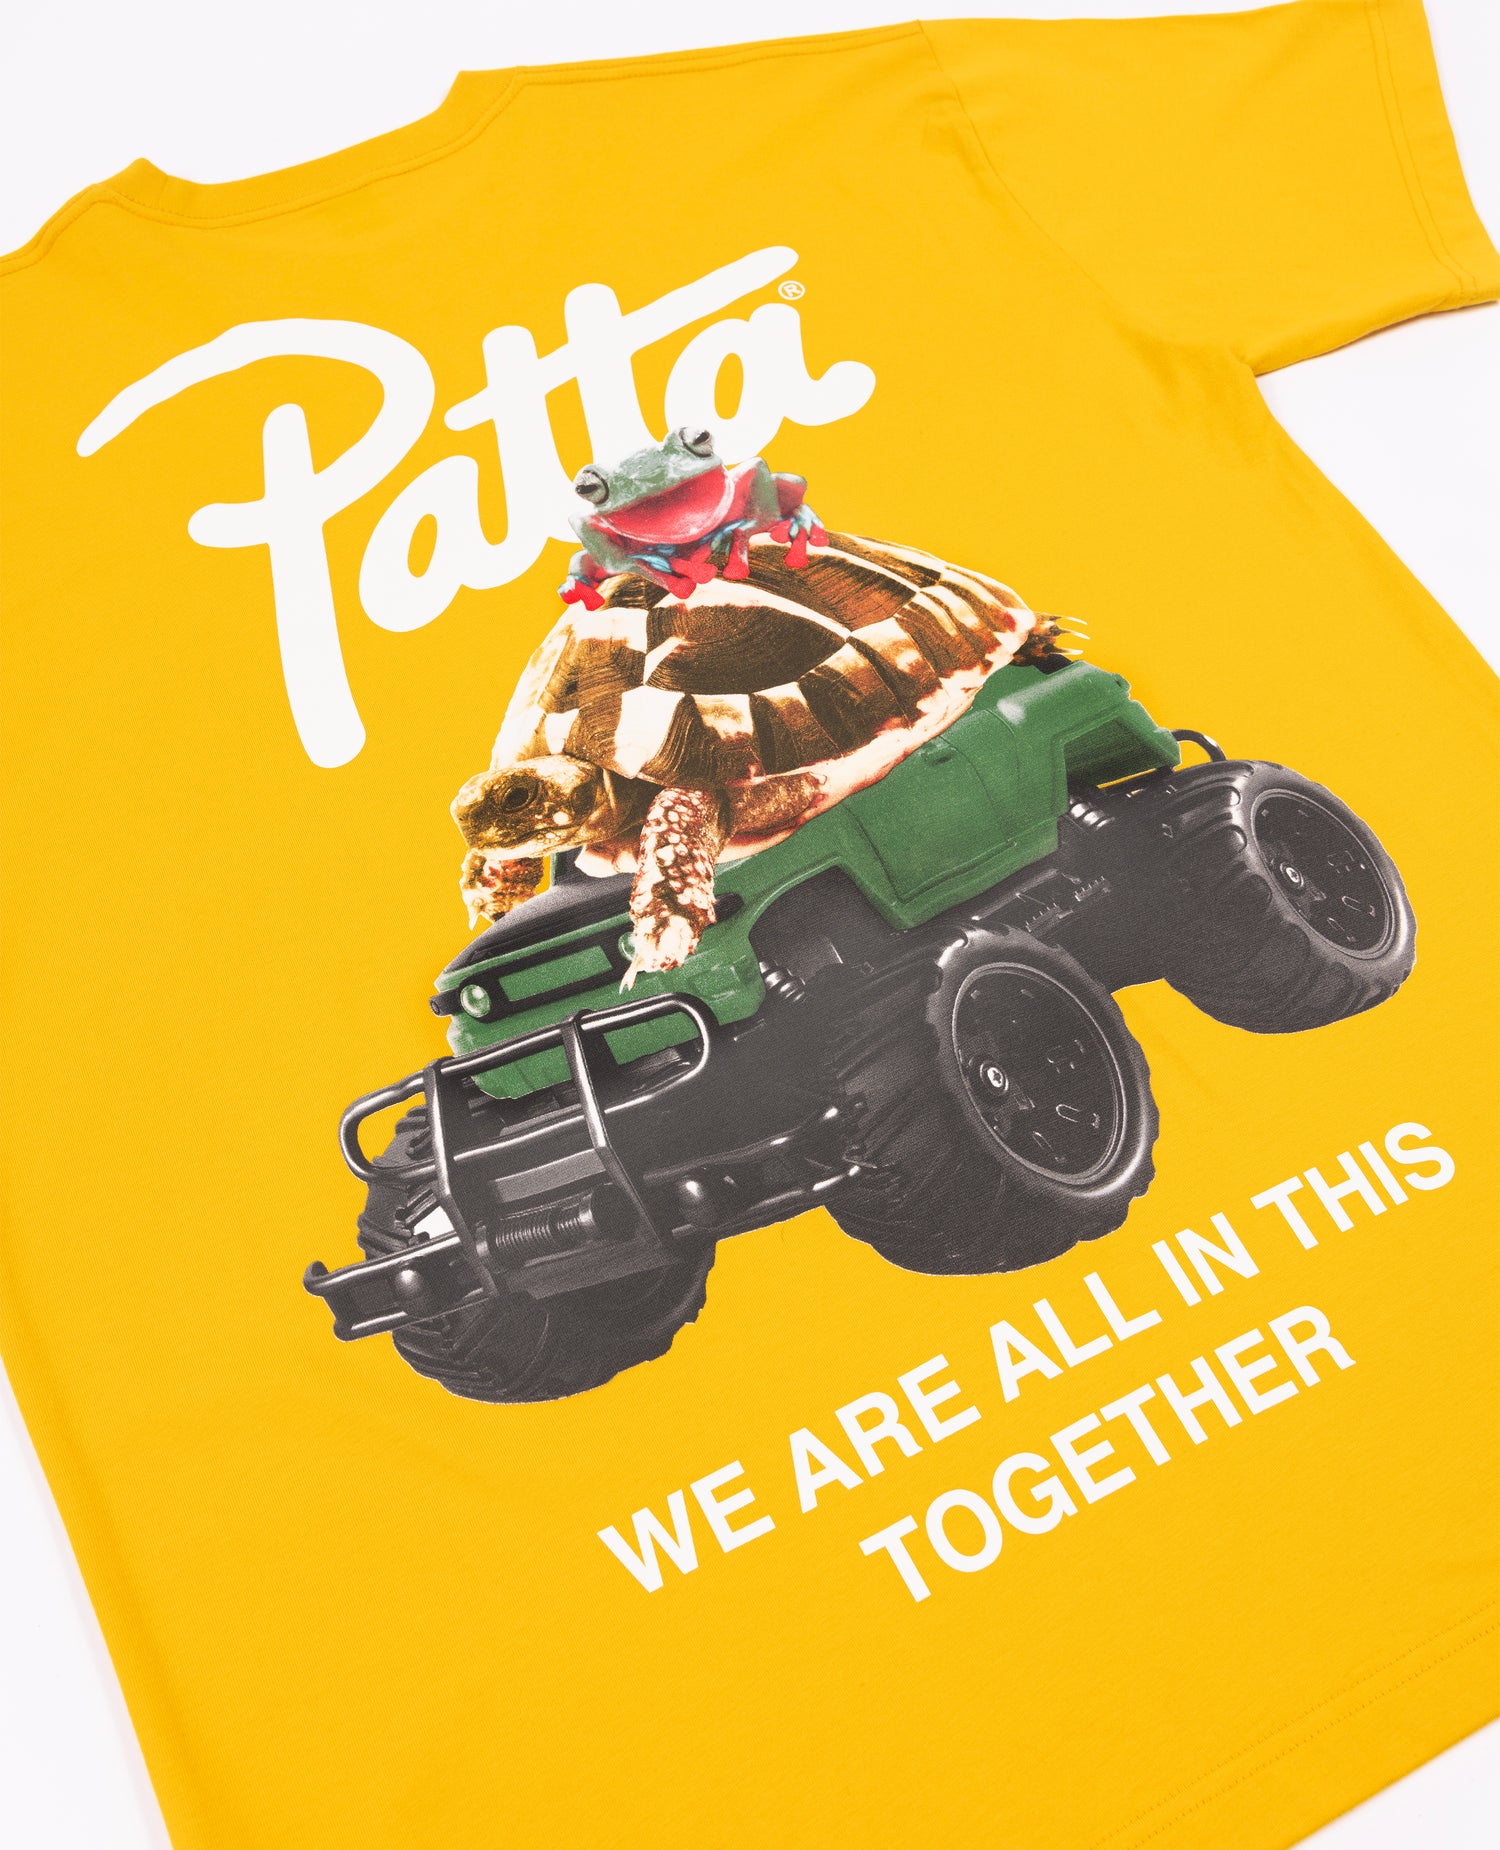 Patta Animal T-Shirt (Old Gold)